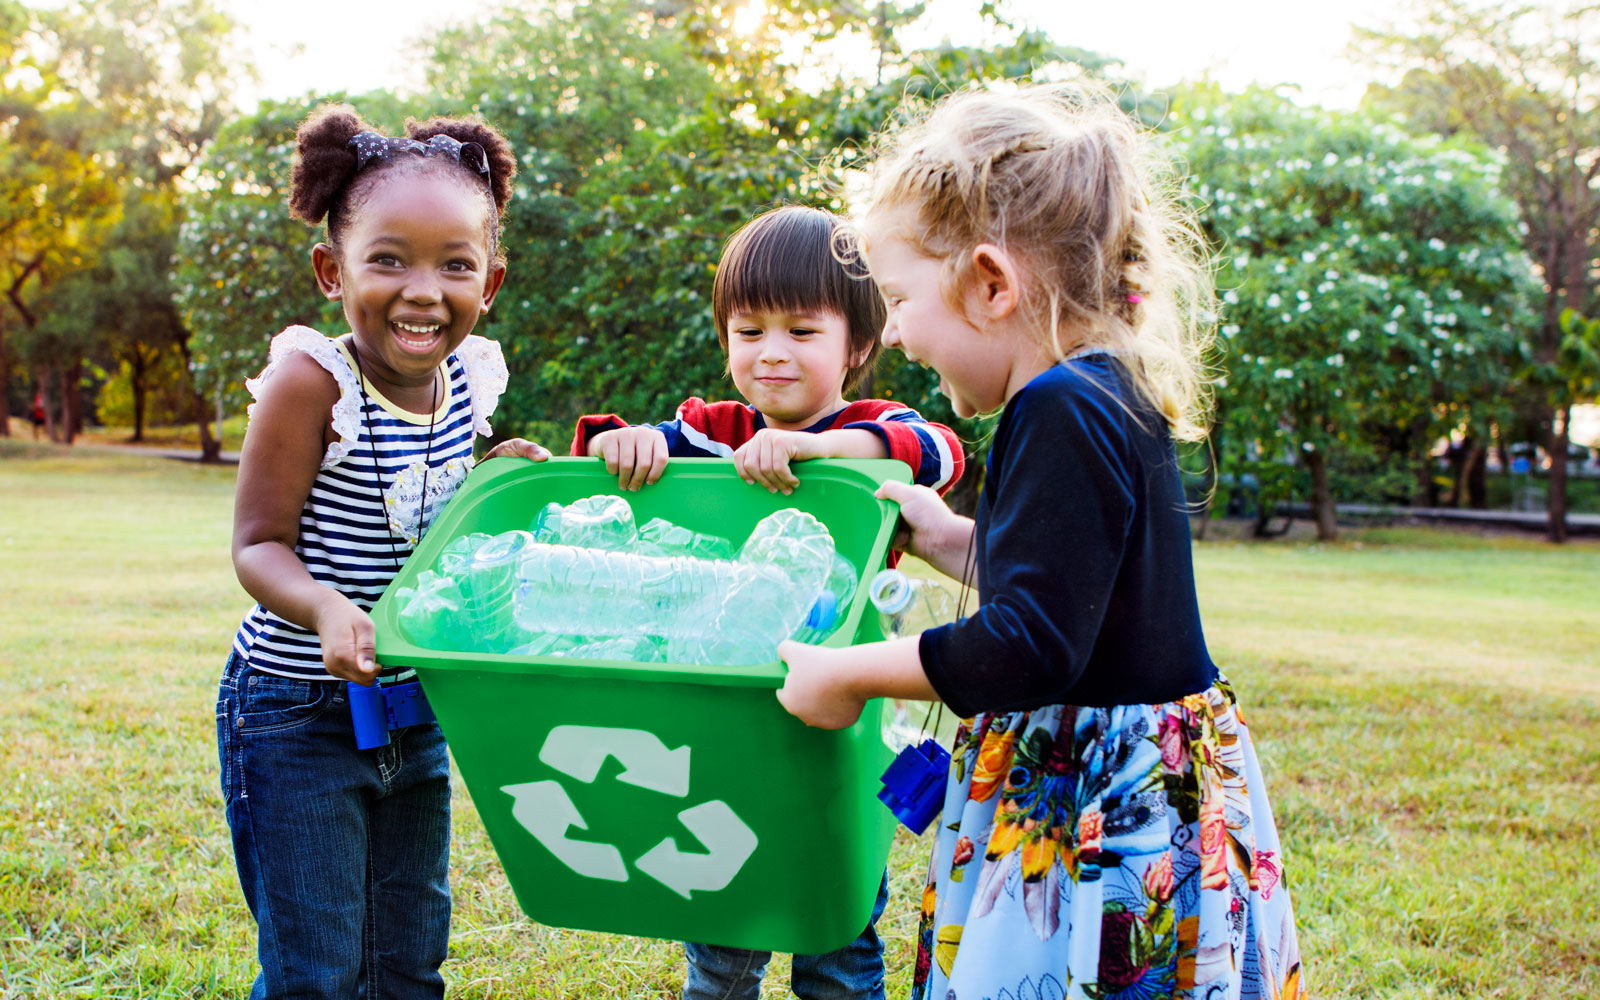 Three children holding a green recycling bin full of plastic bottles